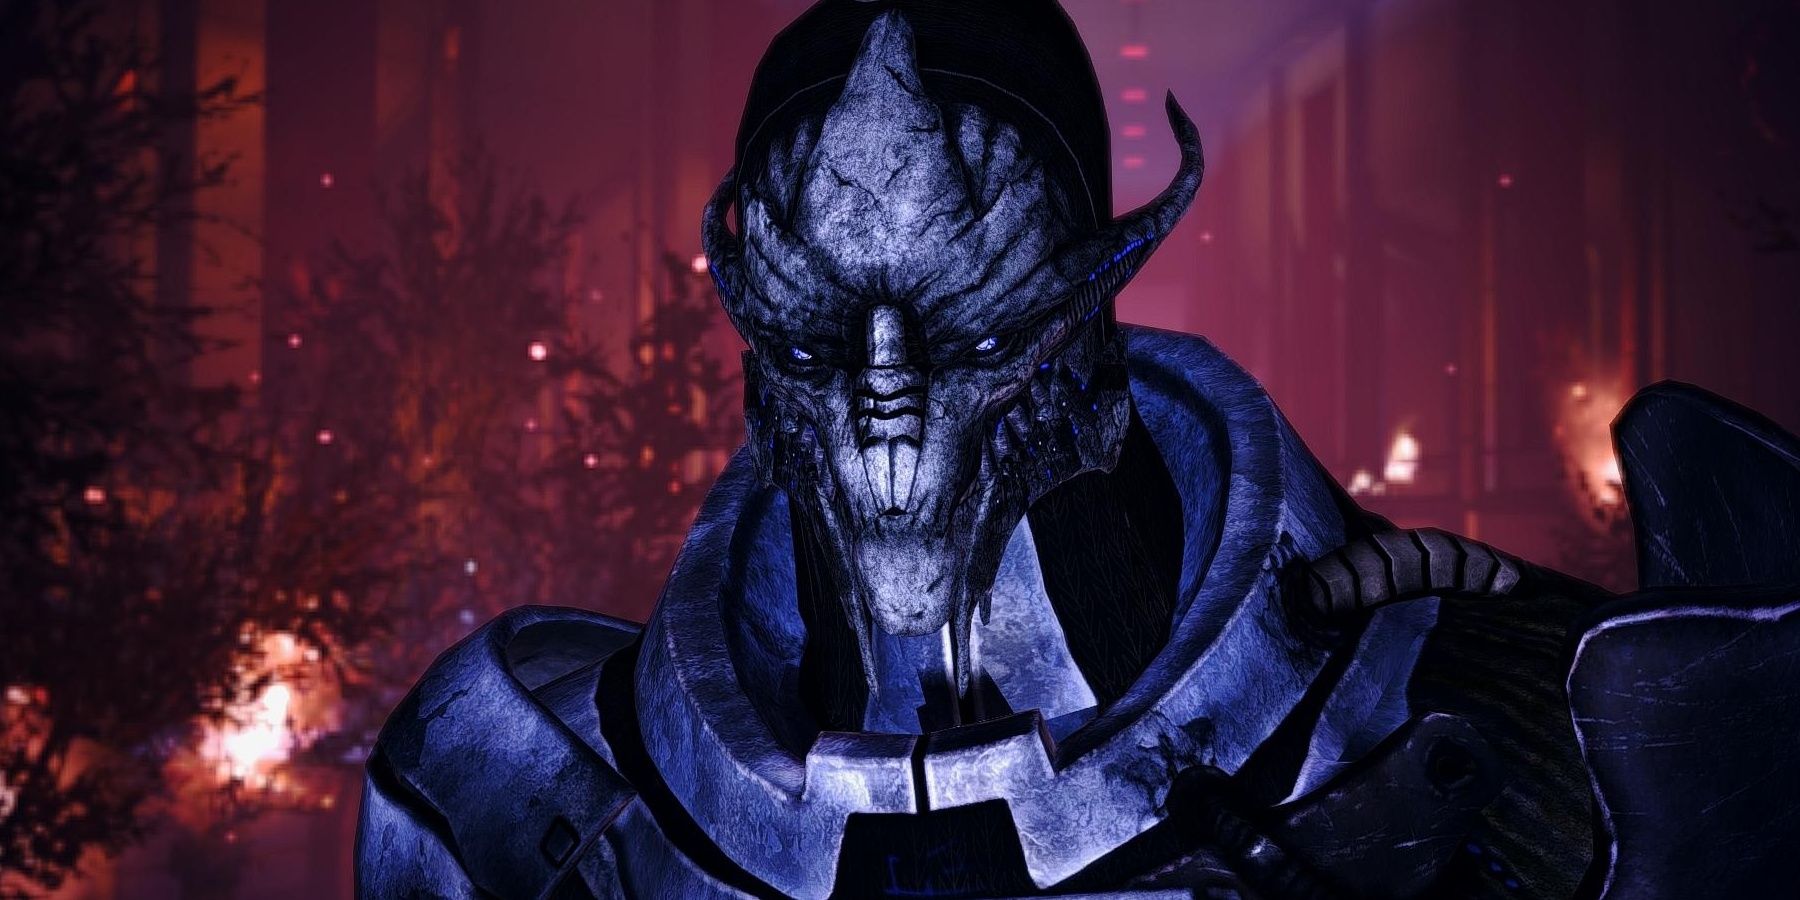 Saren talking to Shepard on the Citadel in Mass Effect